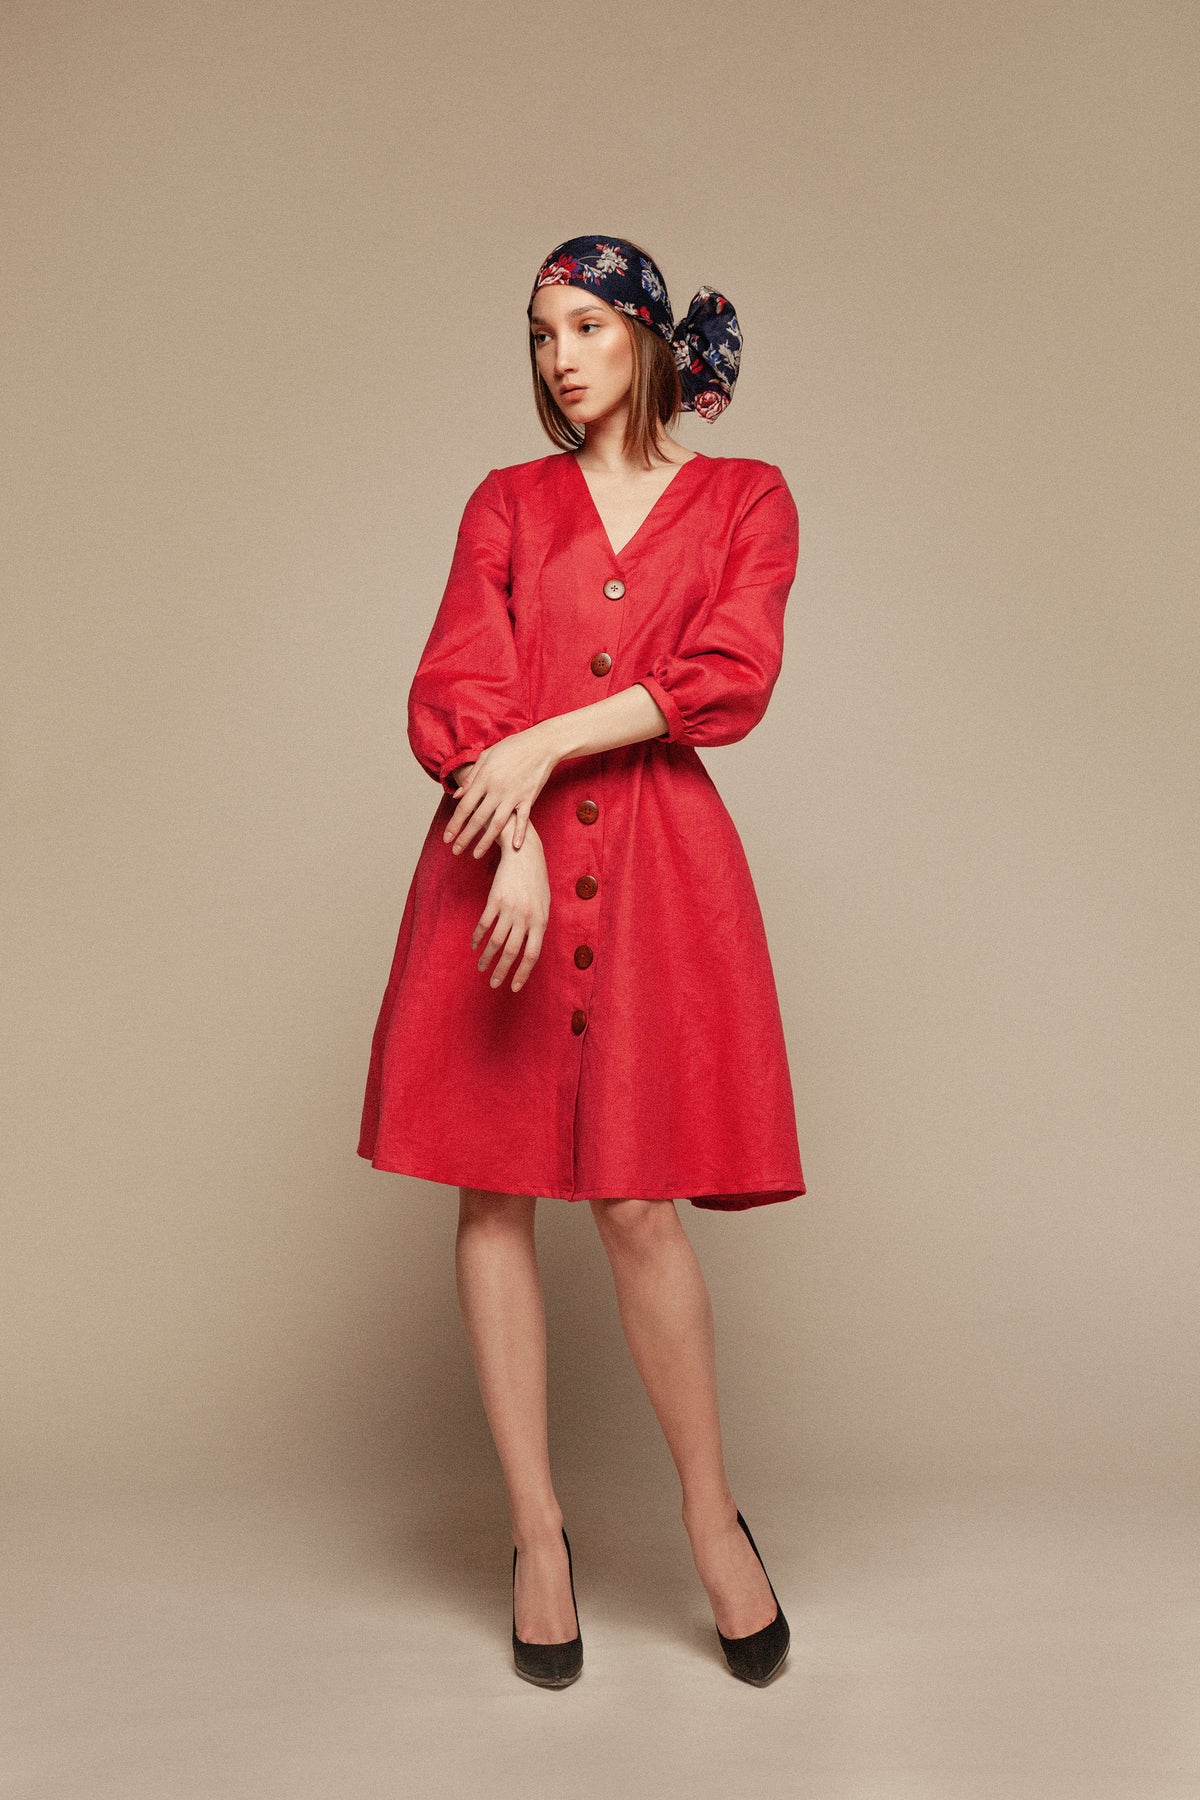 Red short dress